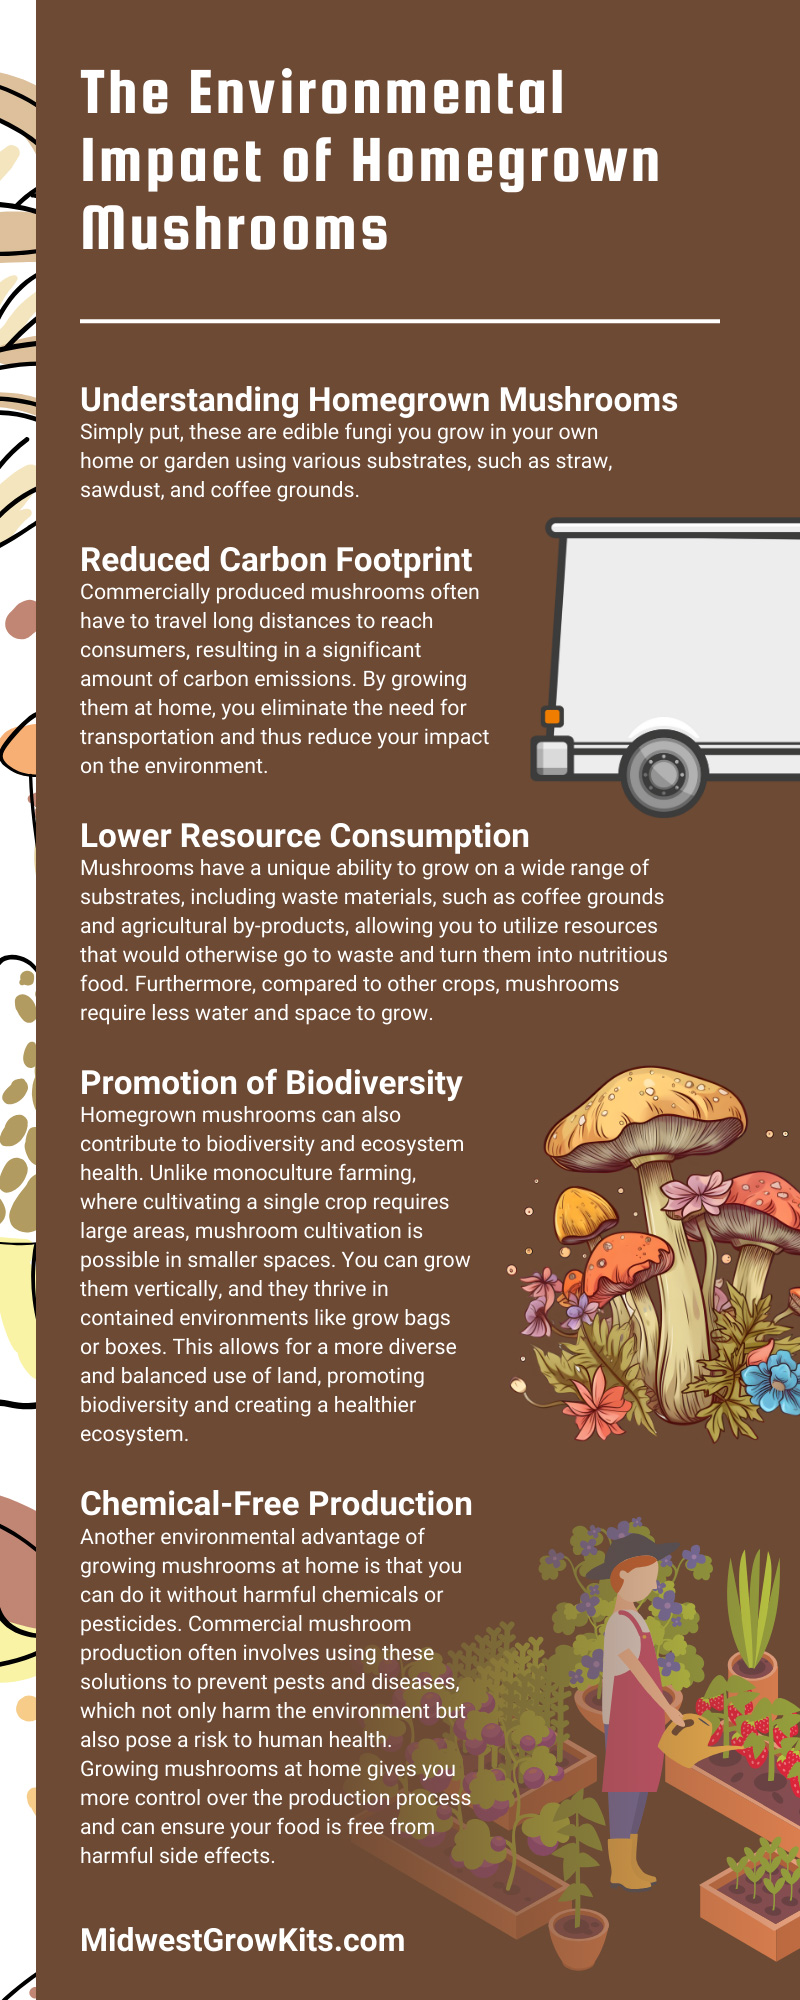 The Environmental Impact of Homegrown Mushrooms